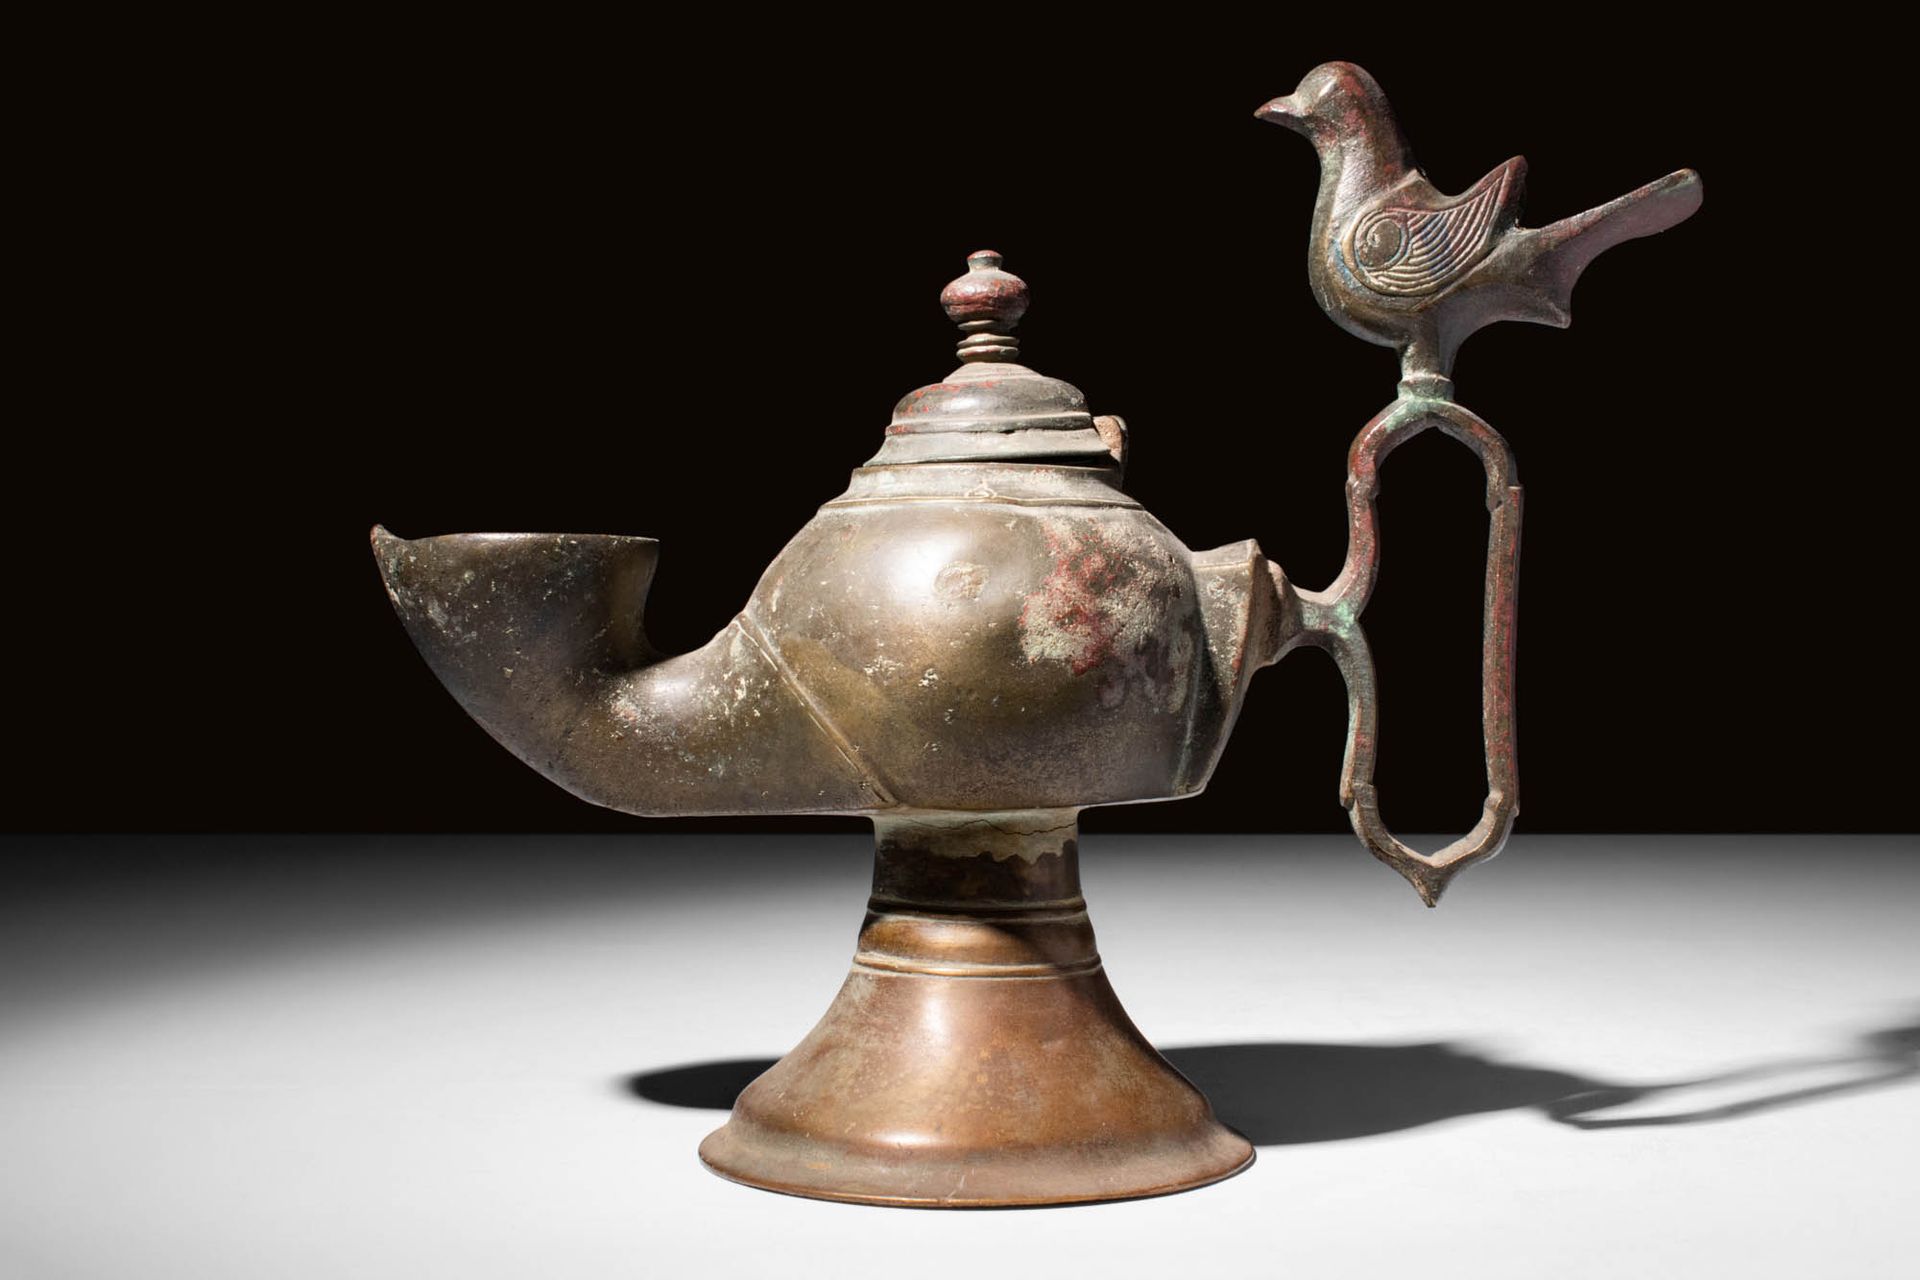 MEDIEVAL SELJUK BRONZE OIL LAMP Ca. AD 1100 - 1300.
An Medieval Seljuk bronze oi&hellip;